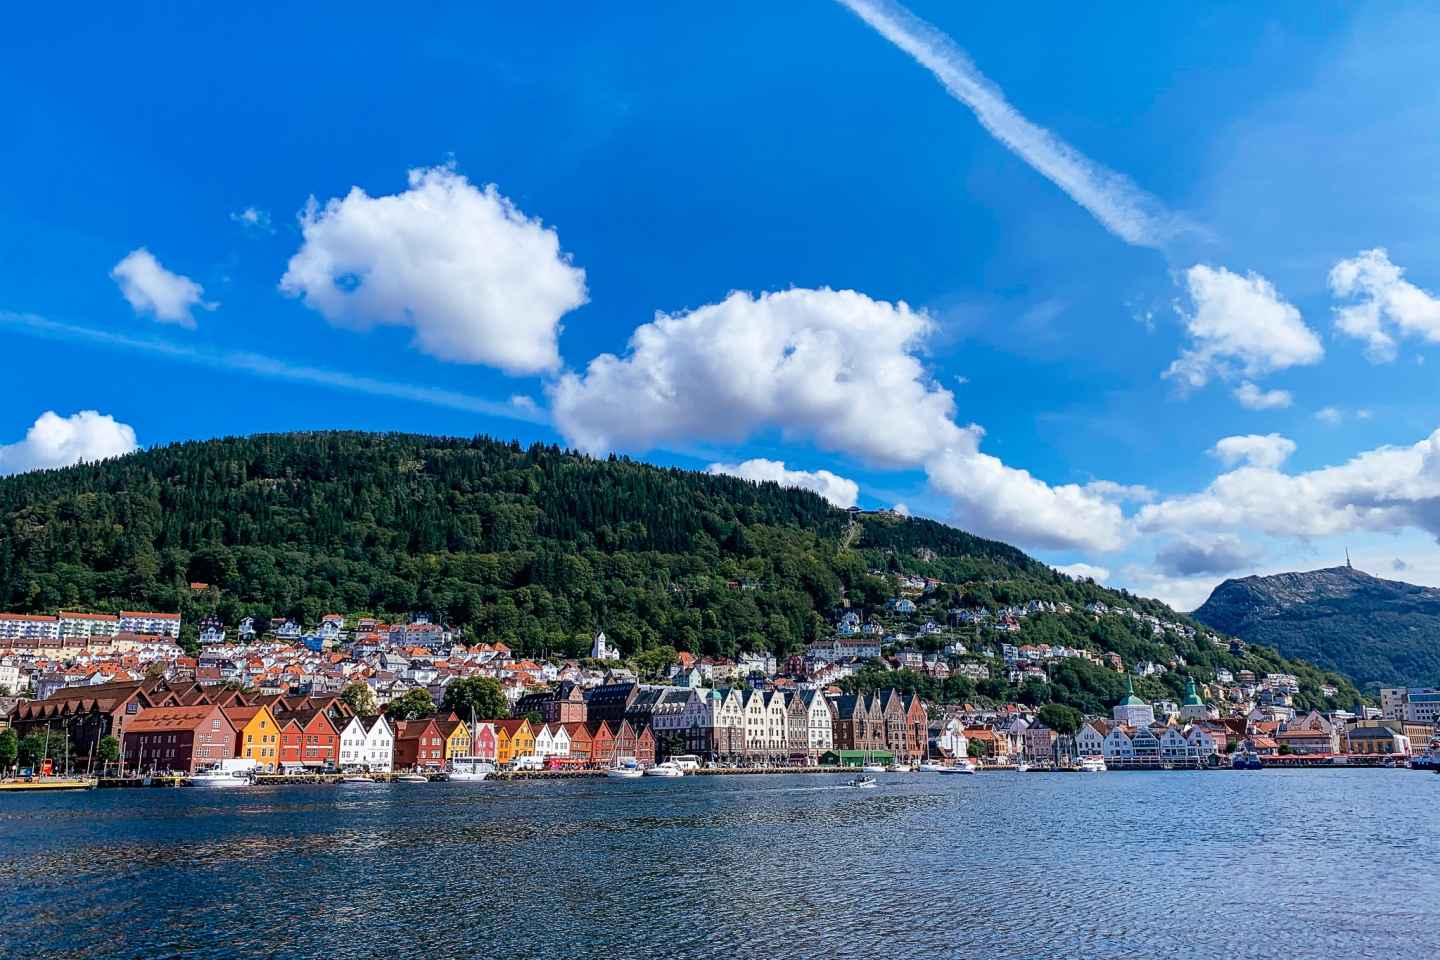 Bergen: A Walk Through Past and Present